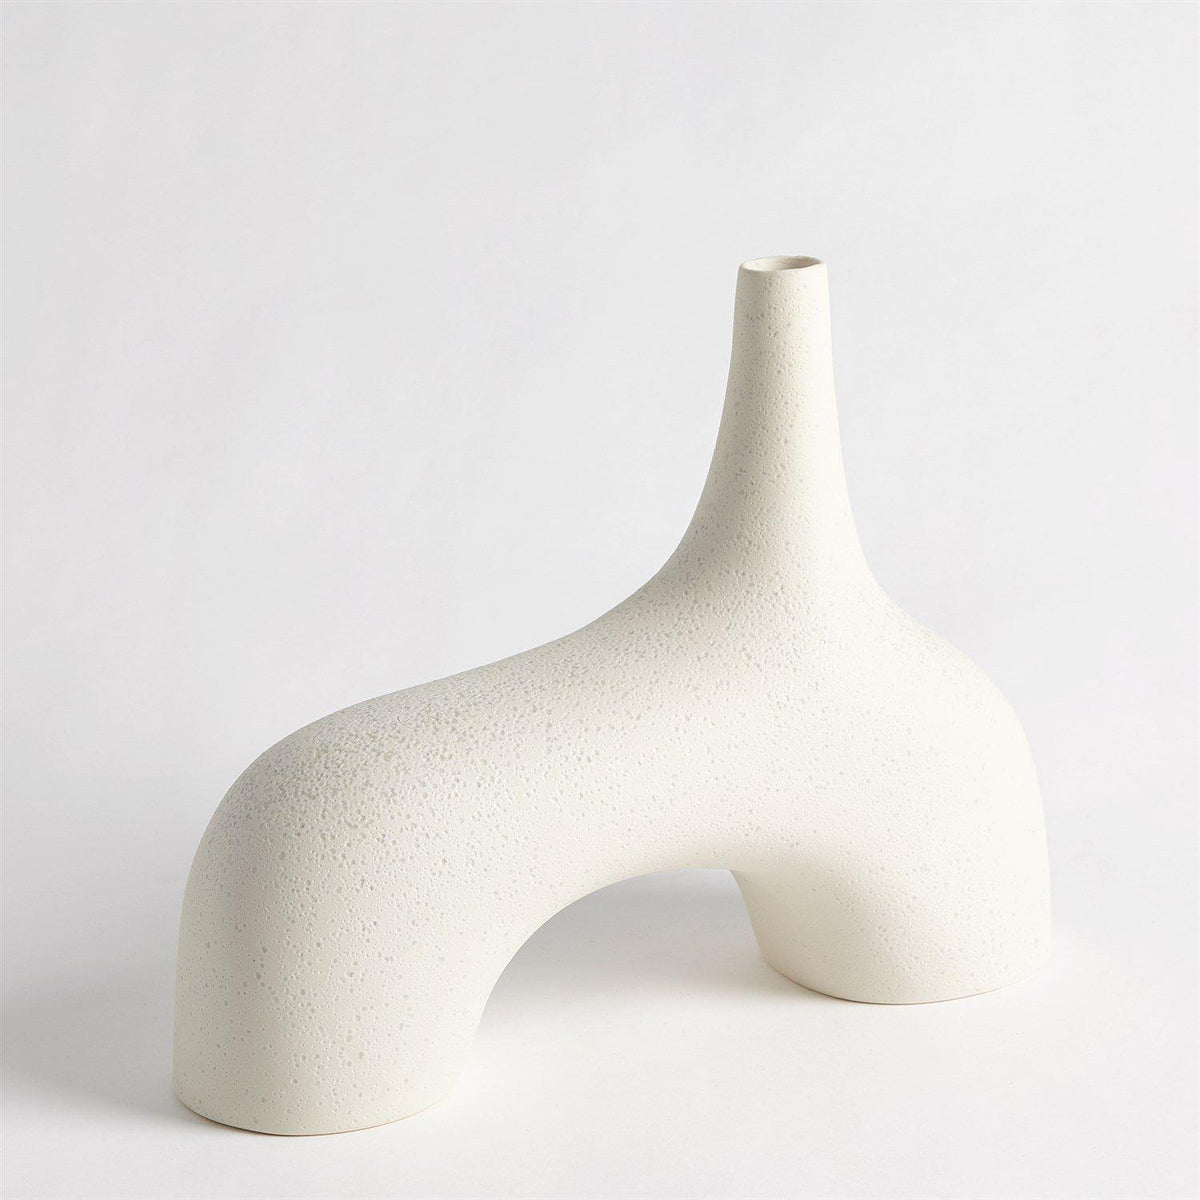 Stretch Vase-Cream Stone-Global Views-Vases-Artistic Elements